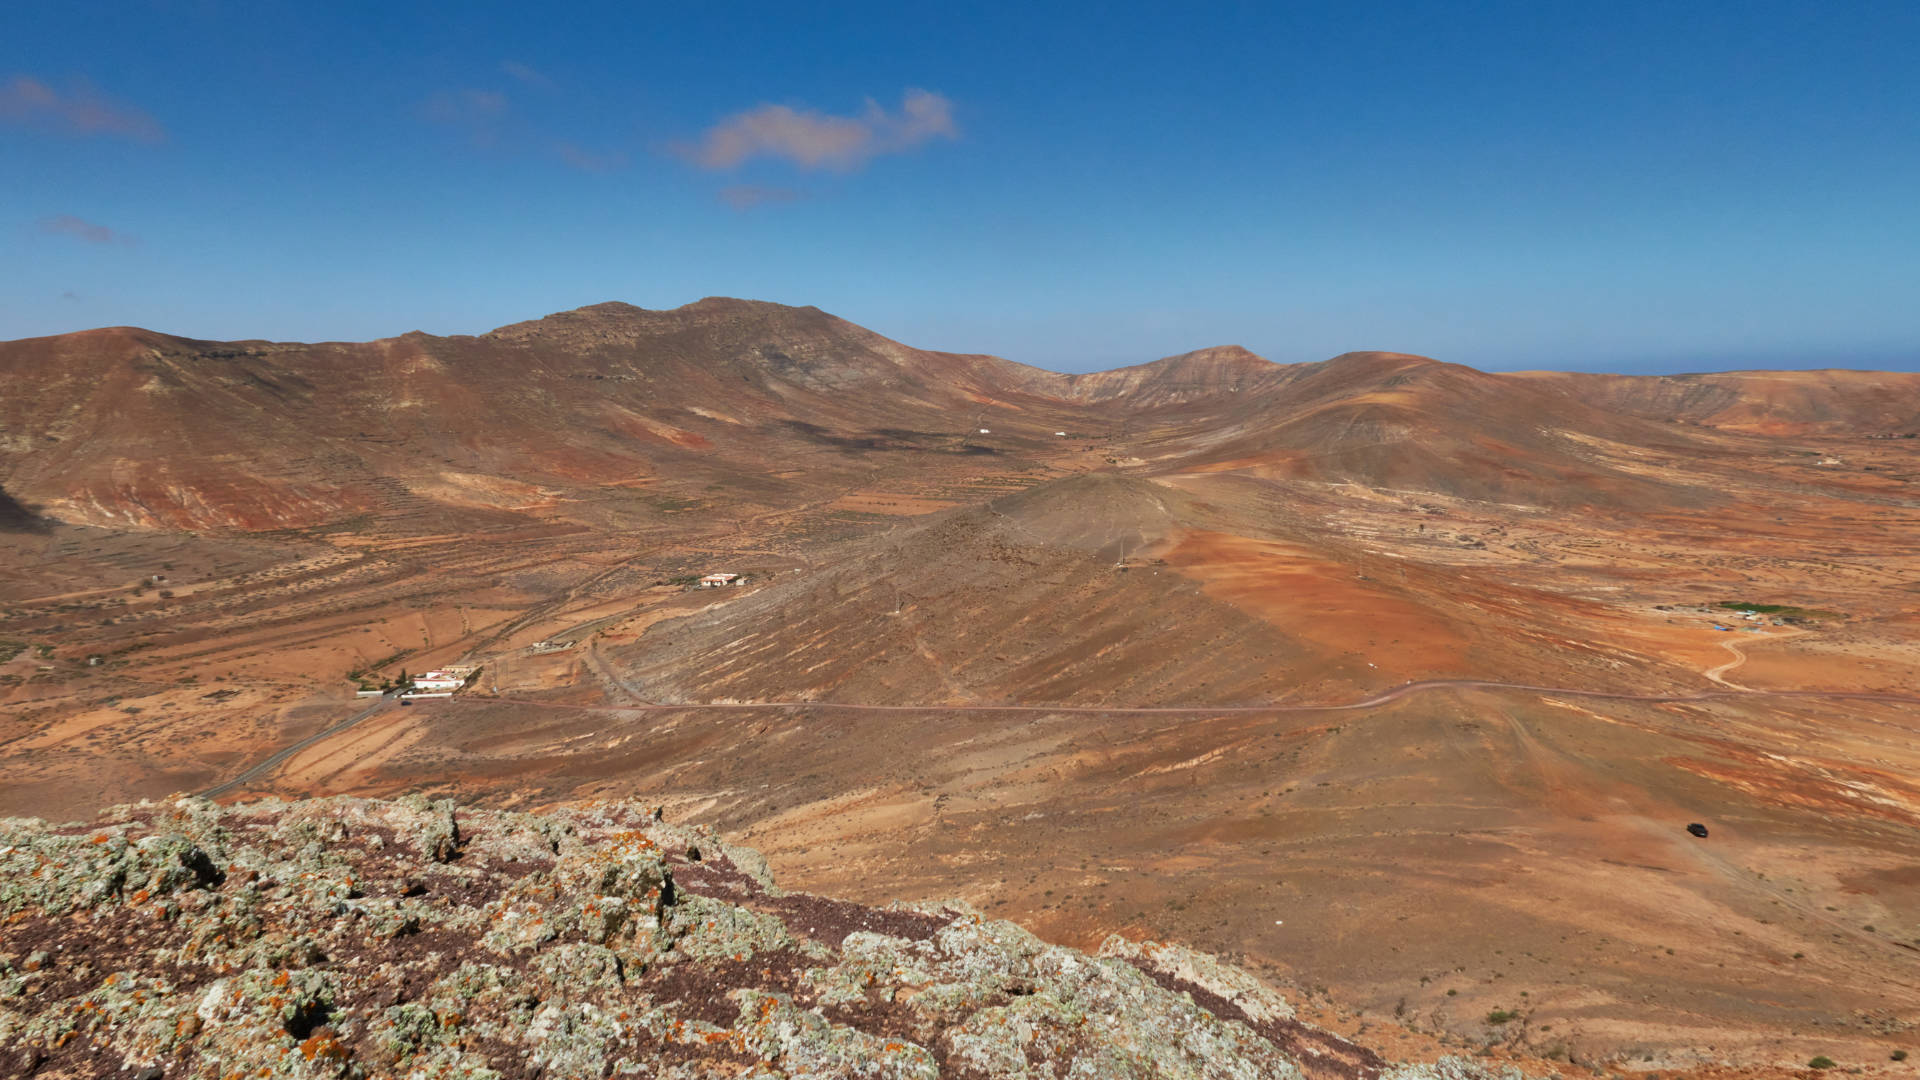 Tiefblick auf das Valle de Tetir vom Montaña de San Andrés (456 m) – am Horizont Pass und Morro de Cagadas Blandas (525 m).